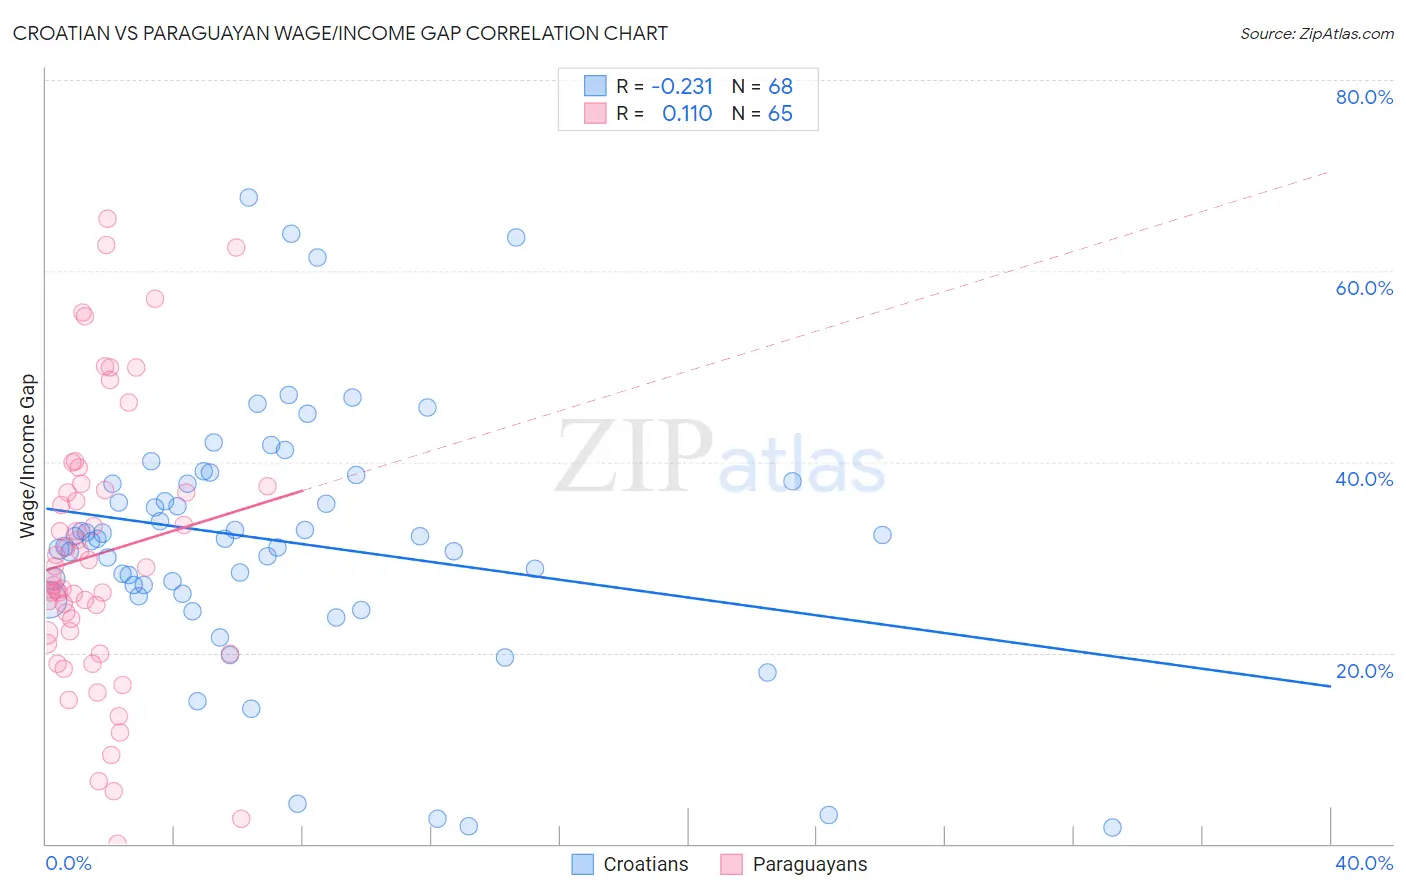 Croatian vs Paraguayan Wage/Income Gap